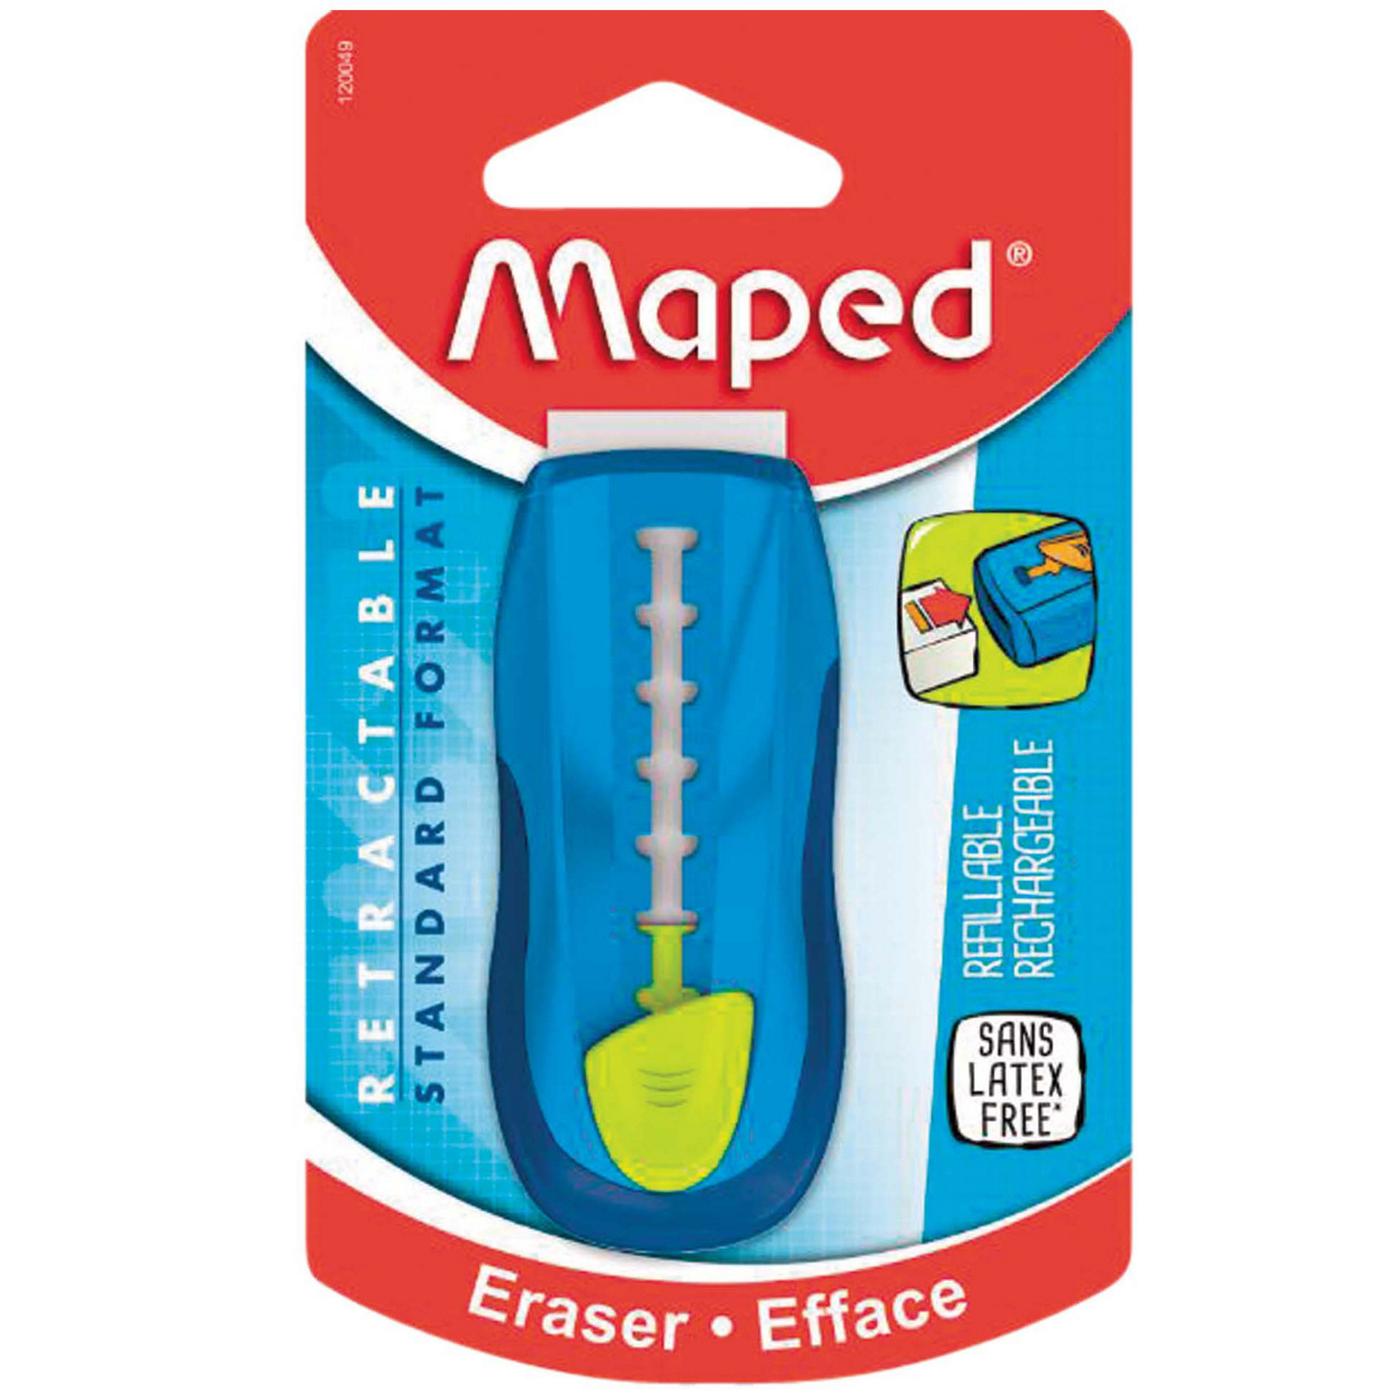 Maped Universal Retractable Eraser - Shop Erasers & Ink Correction at H-E-B